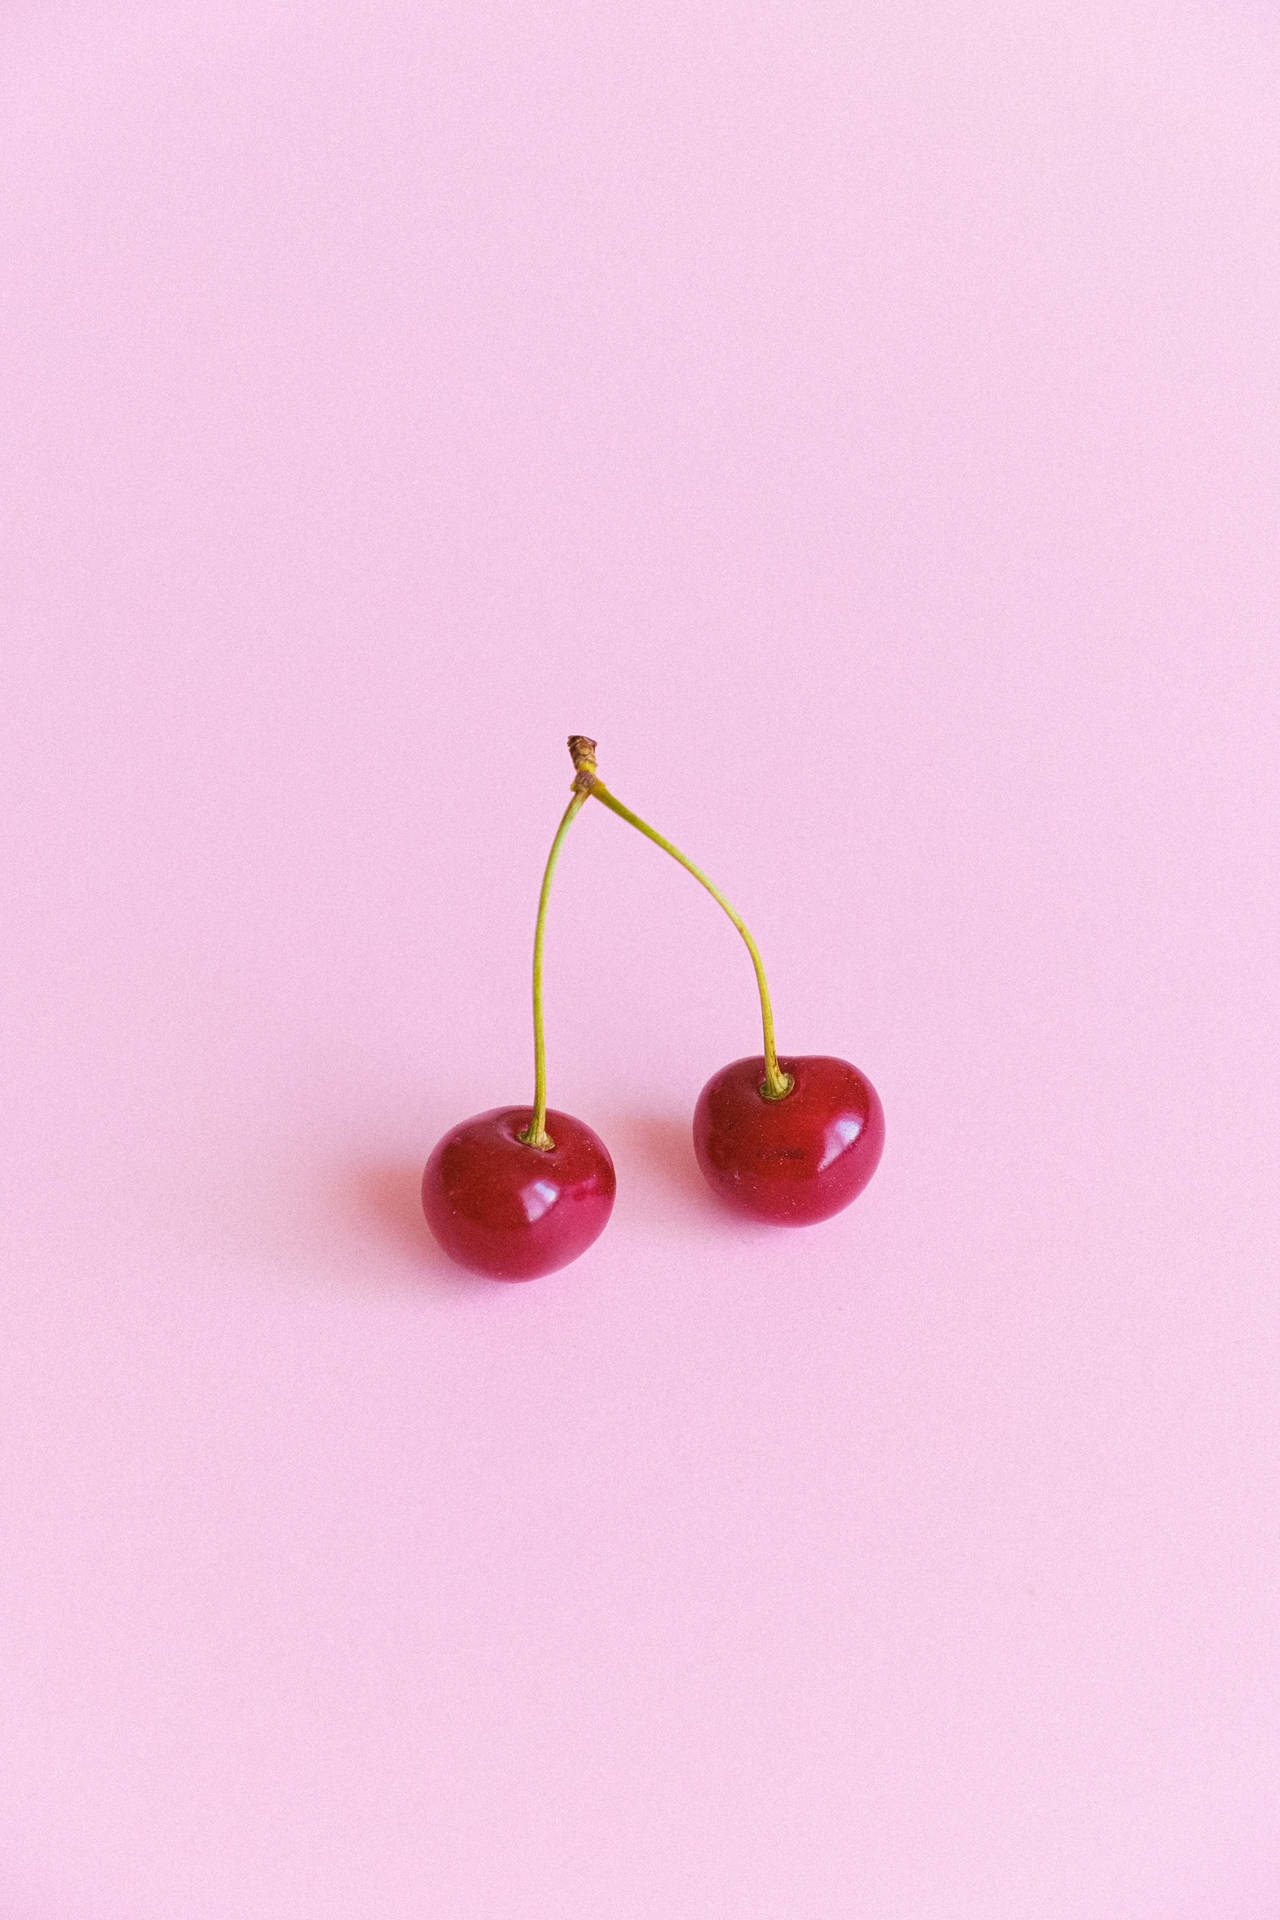 Cherries On Pink Background Wallpaper